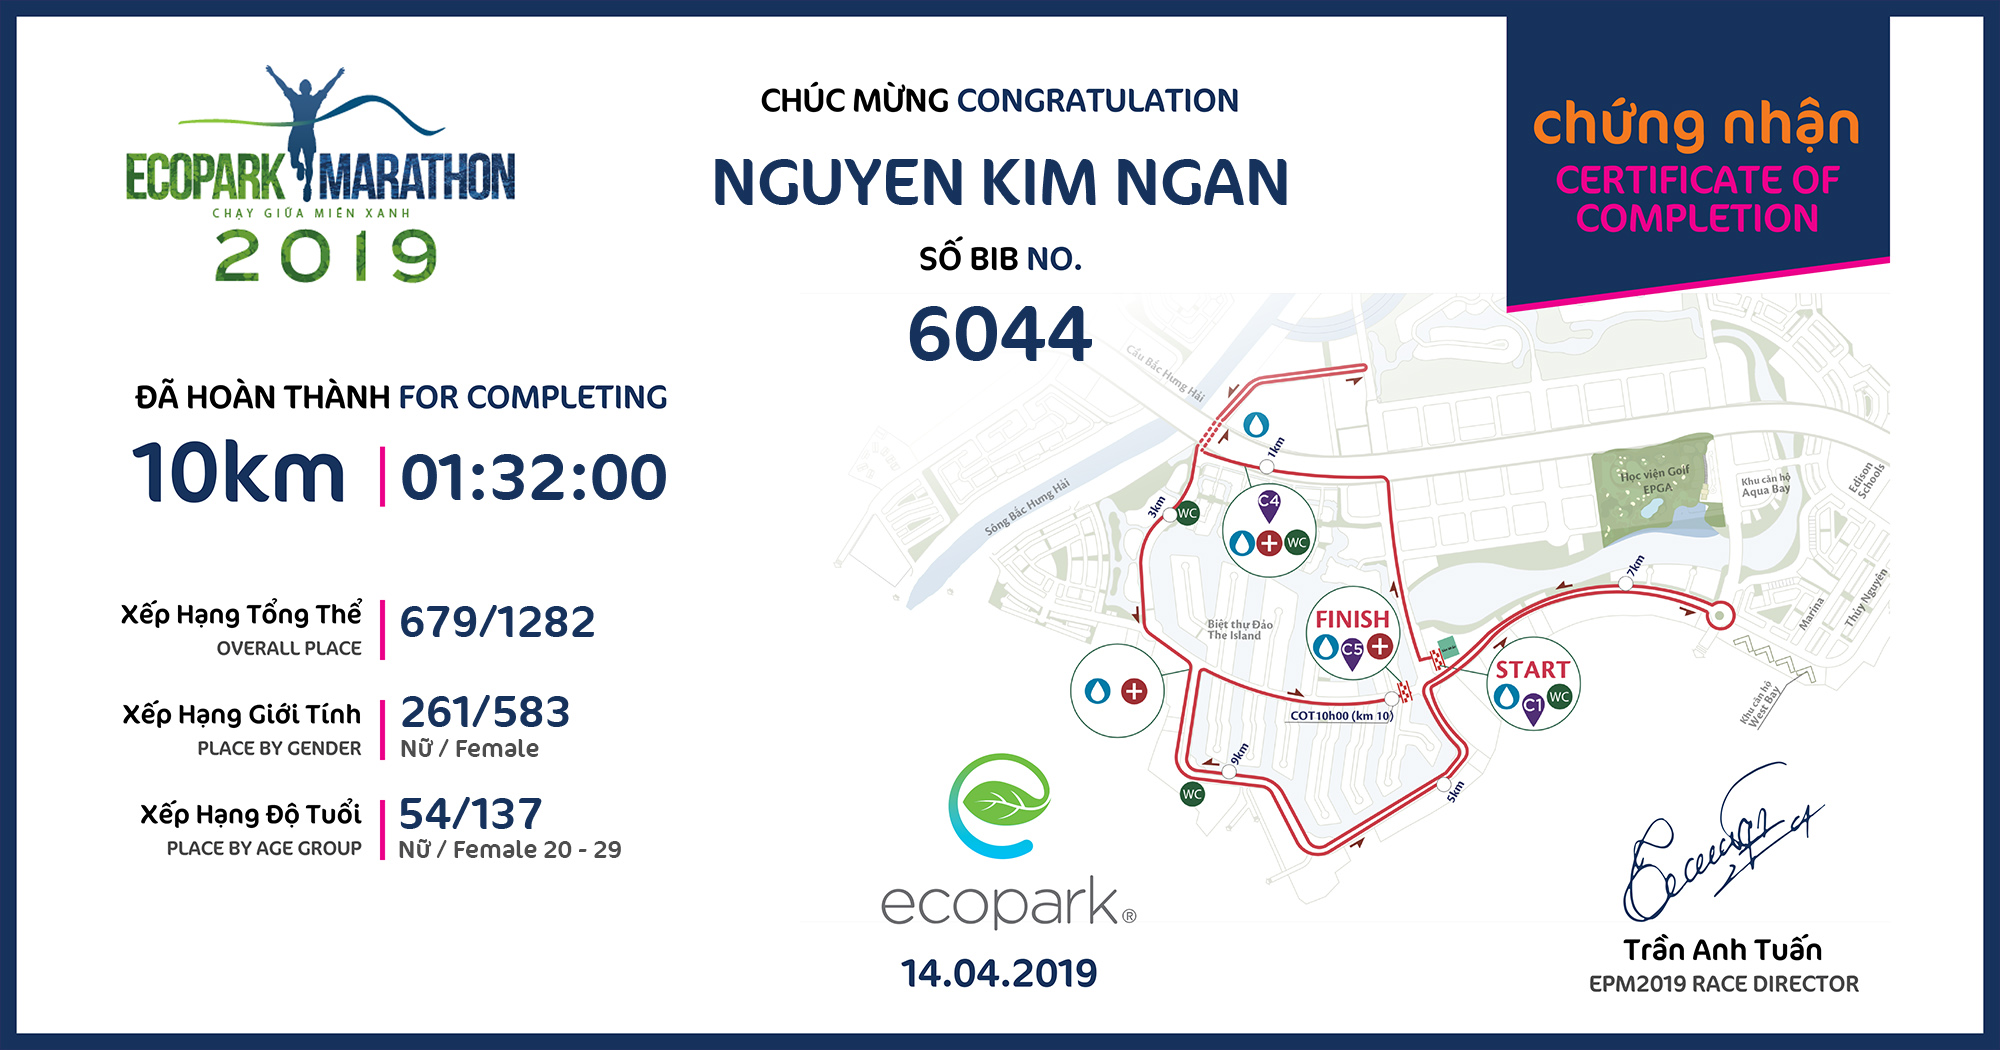 6044 - Nguyen Kim Ngan